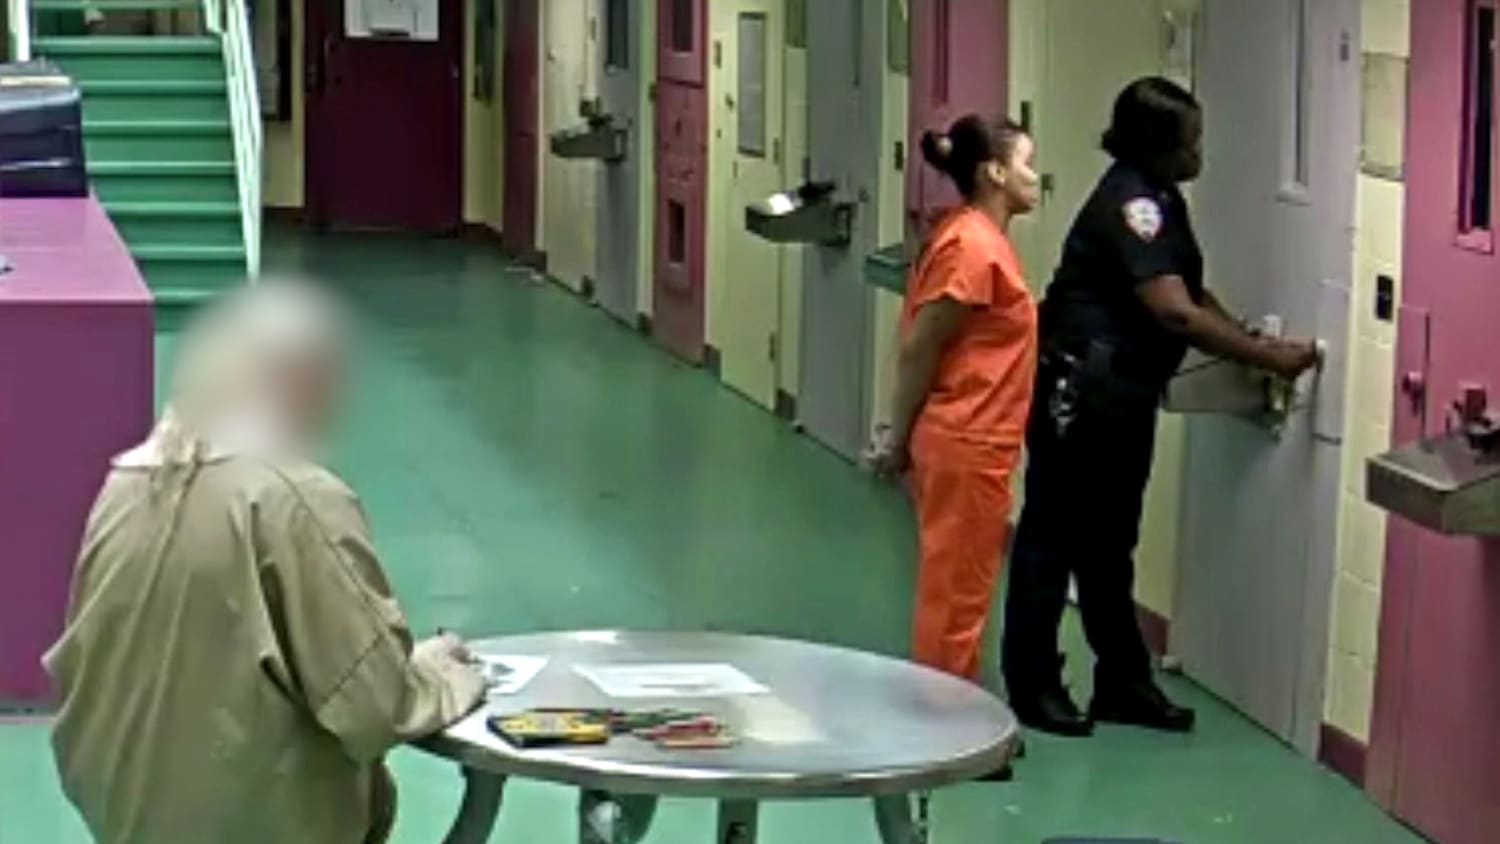 women in jail cells